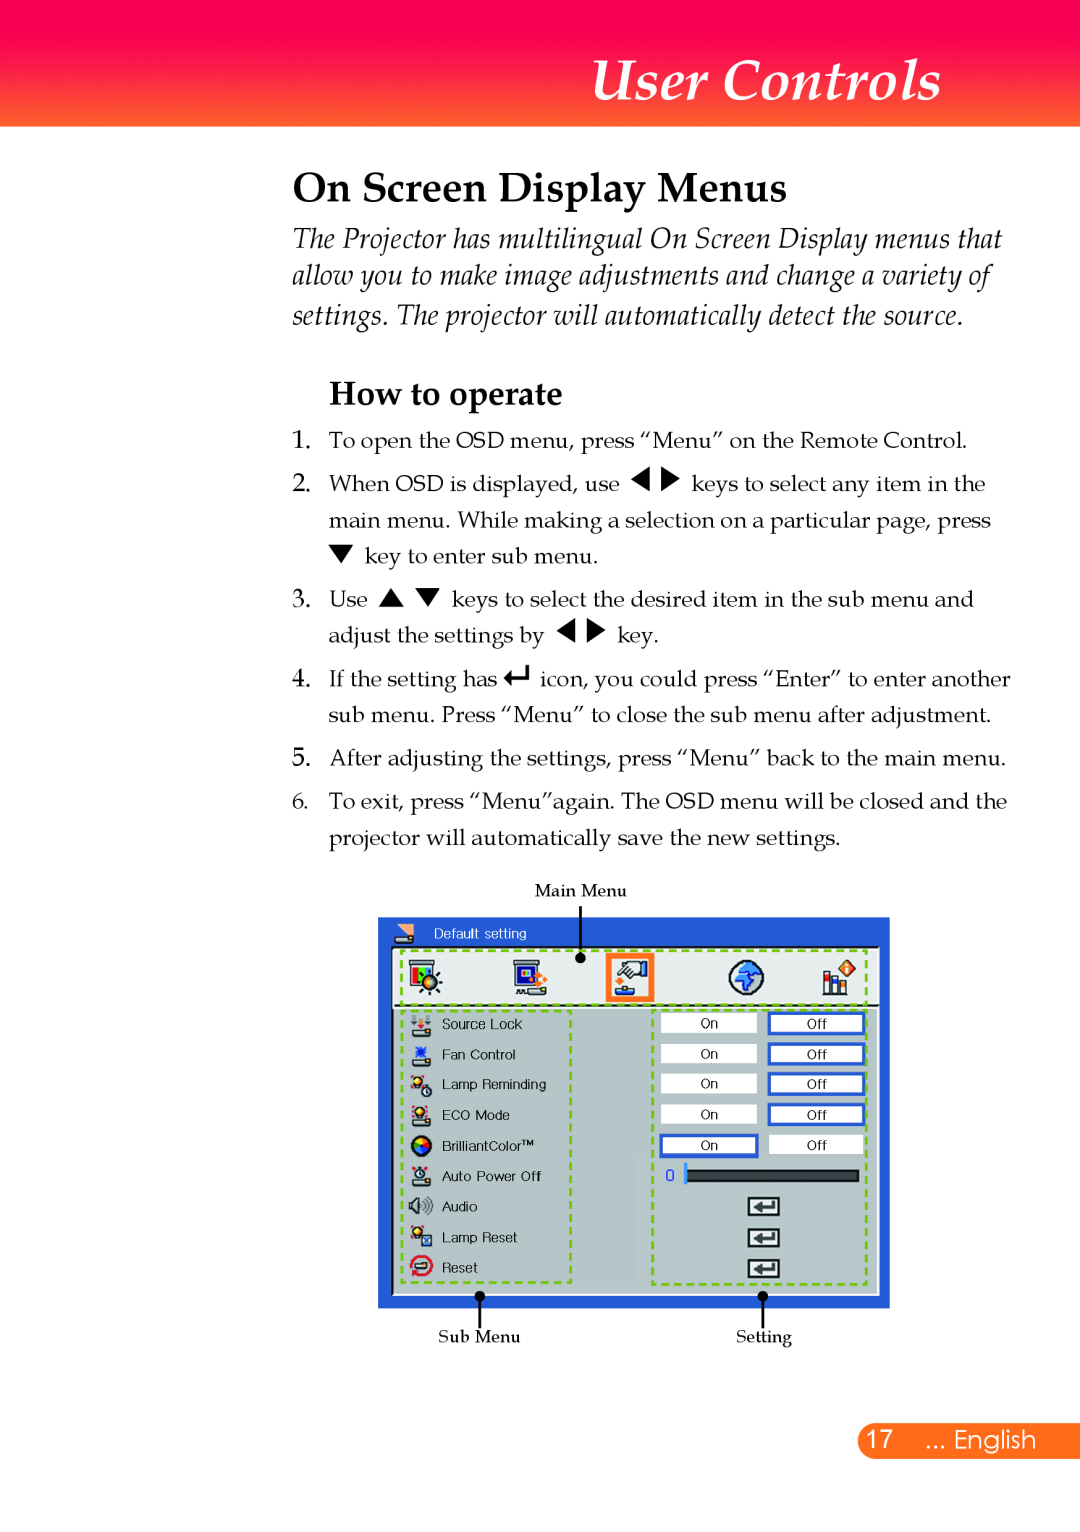 InFocus X9 manual User Controls, On Screen Display Menus, How to operate, English 